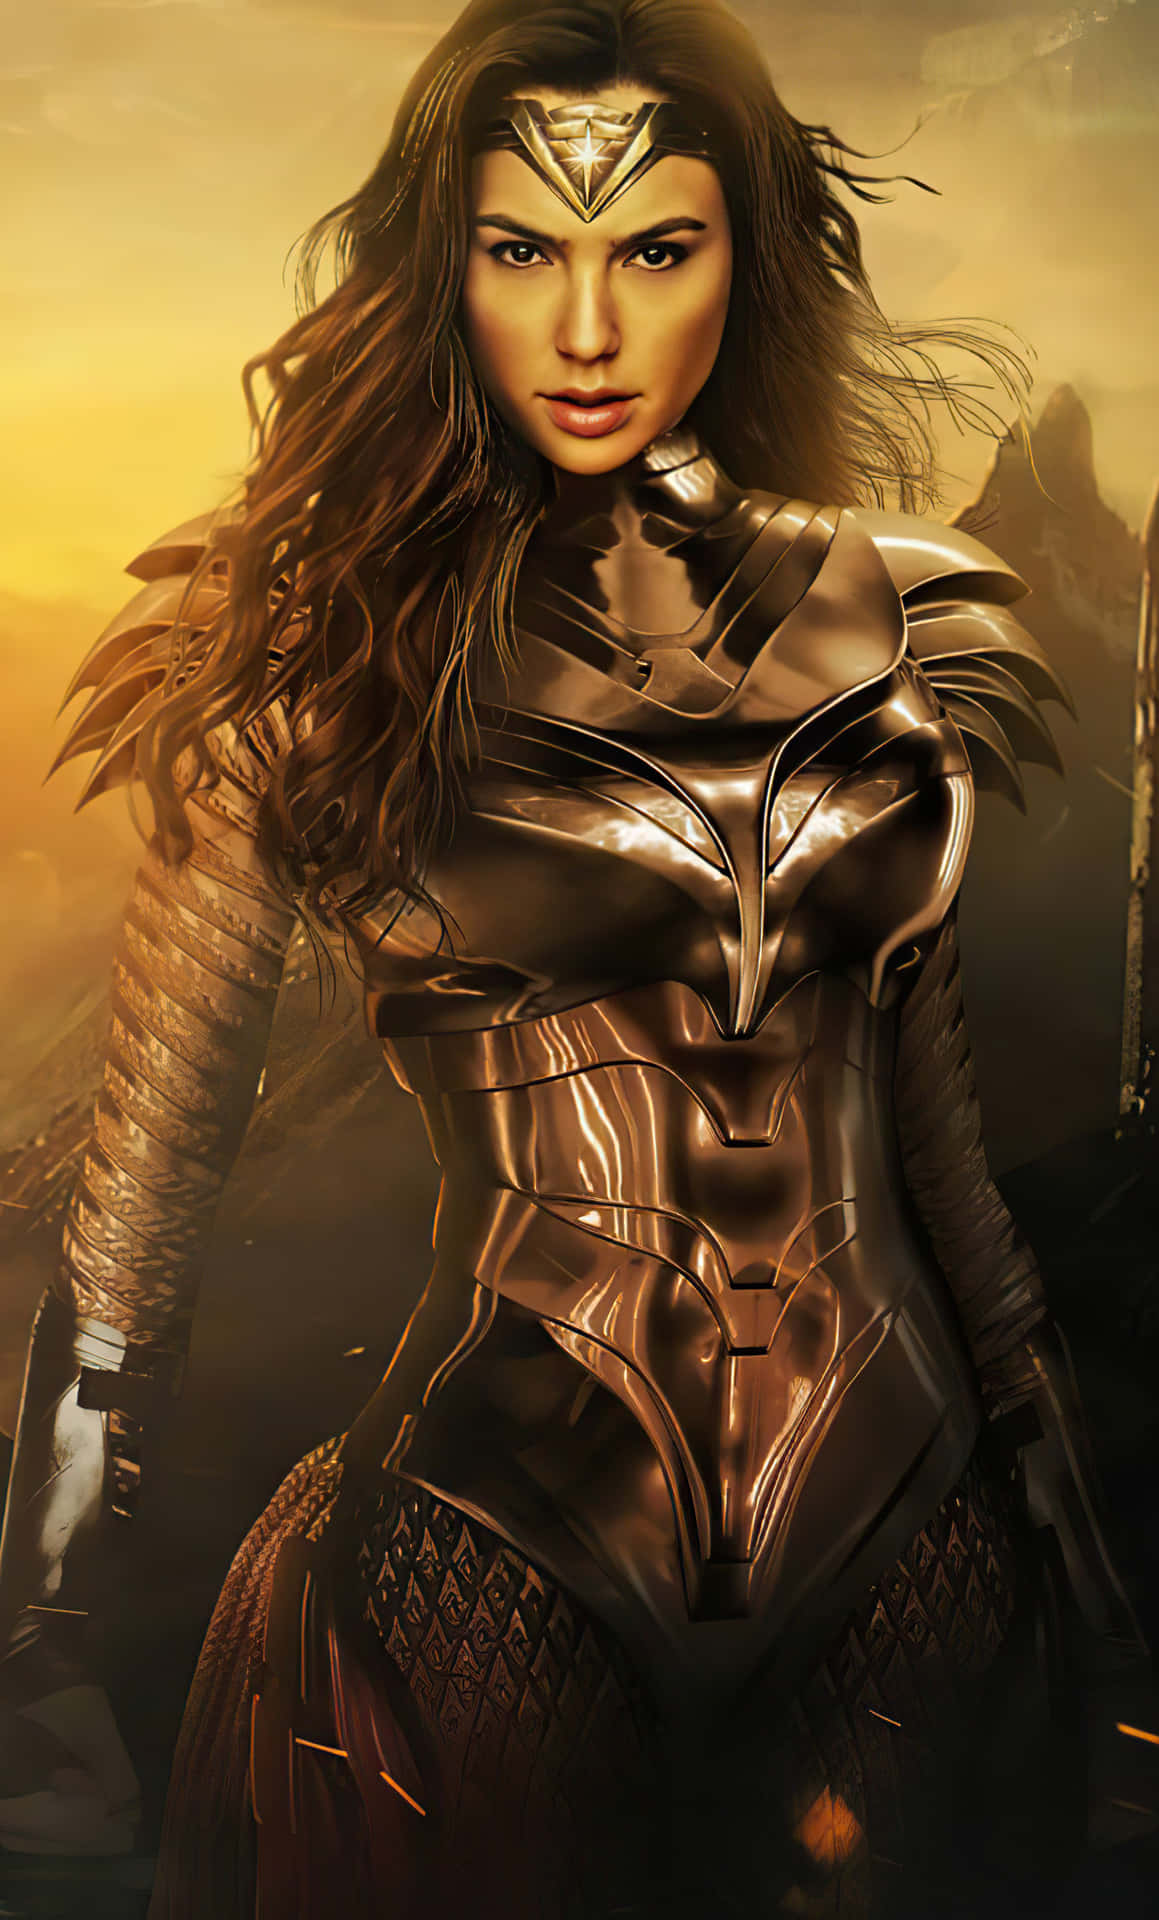 Gal Gadot as Diana Prince, the Amazonian superhero from DC's Wonder Woman franchise